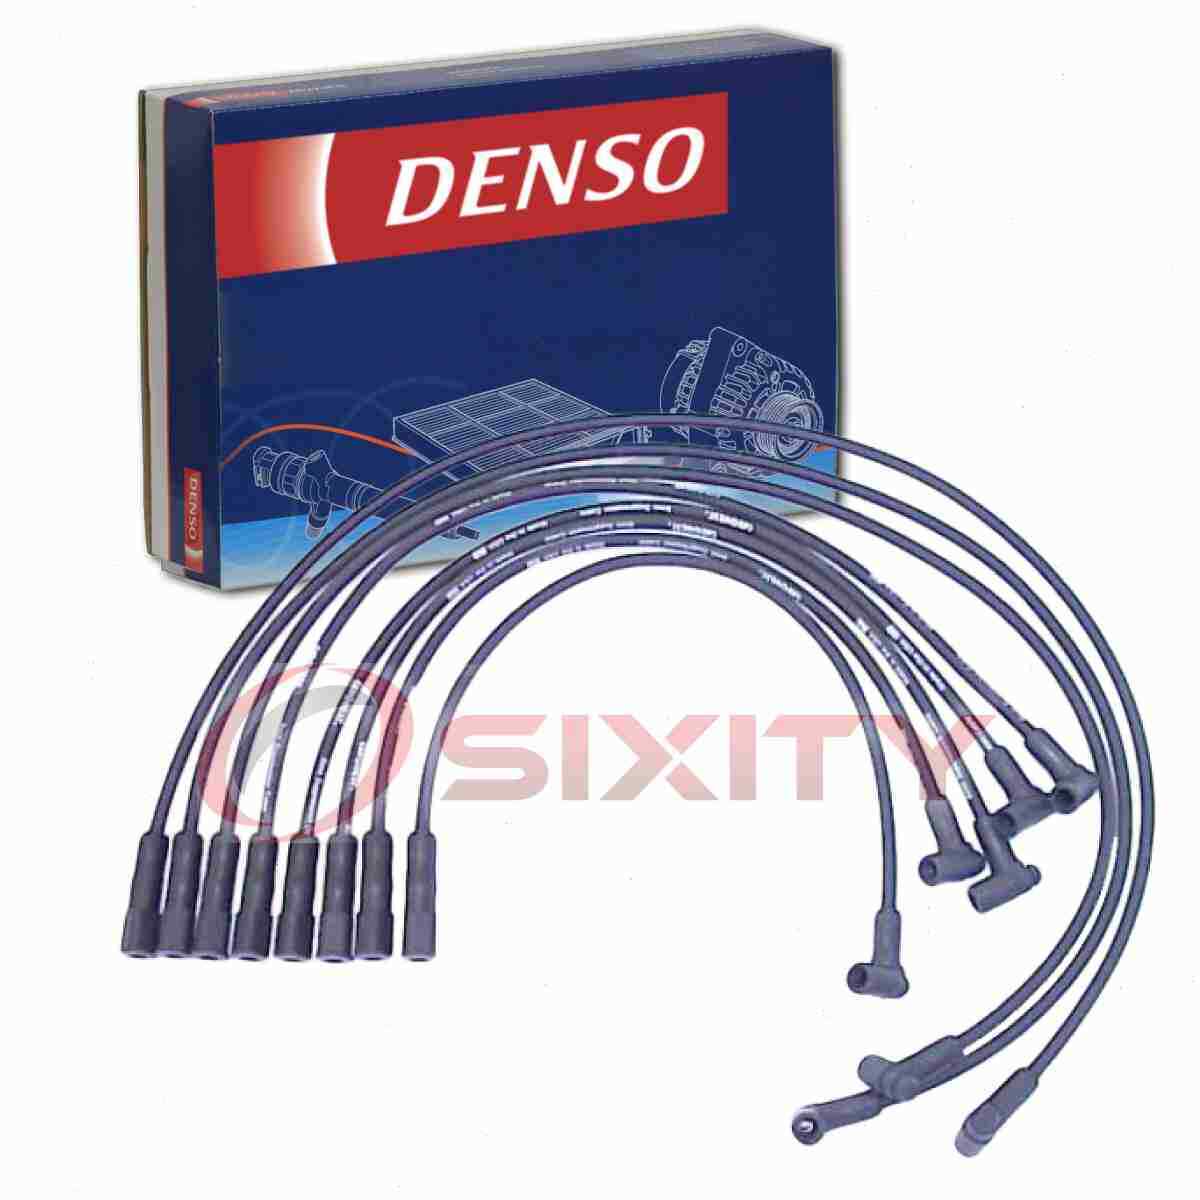 Denso Spark Plug Wire Set for 1978-1984 Oldsmobile Cutlass Calais 4.3L 5.0L pv